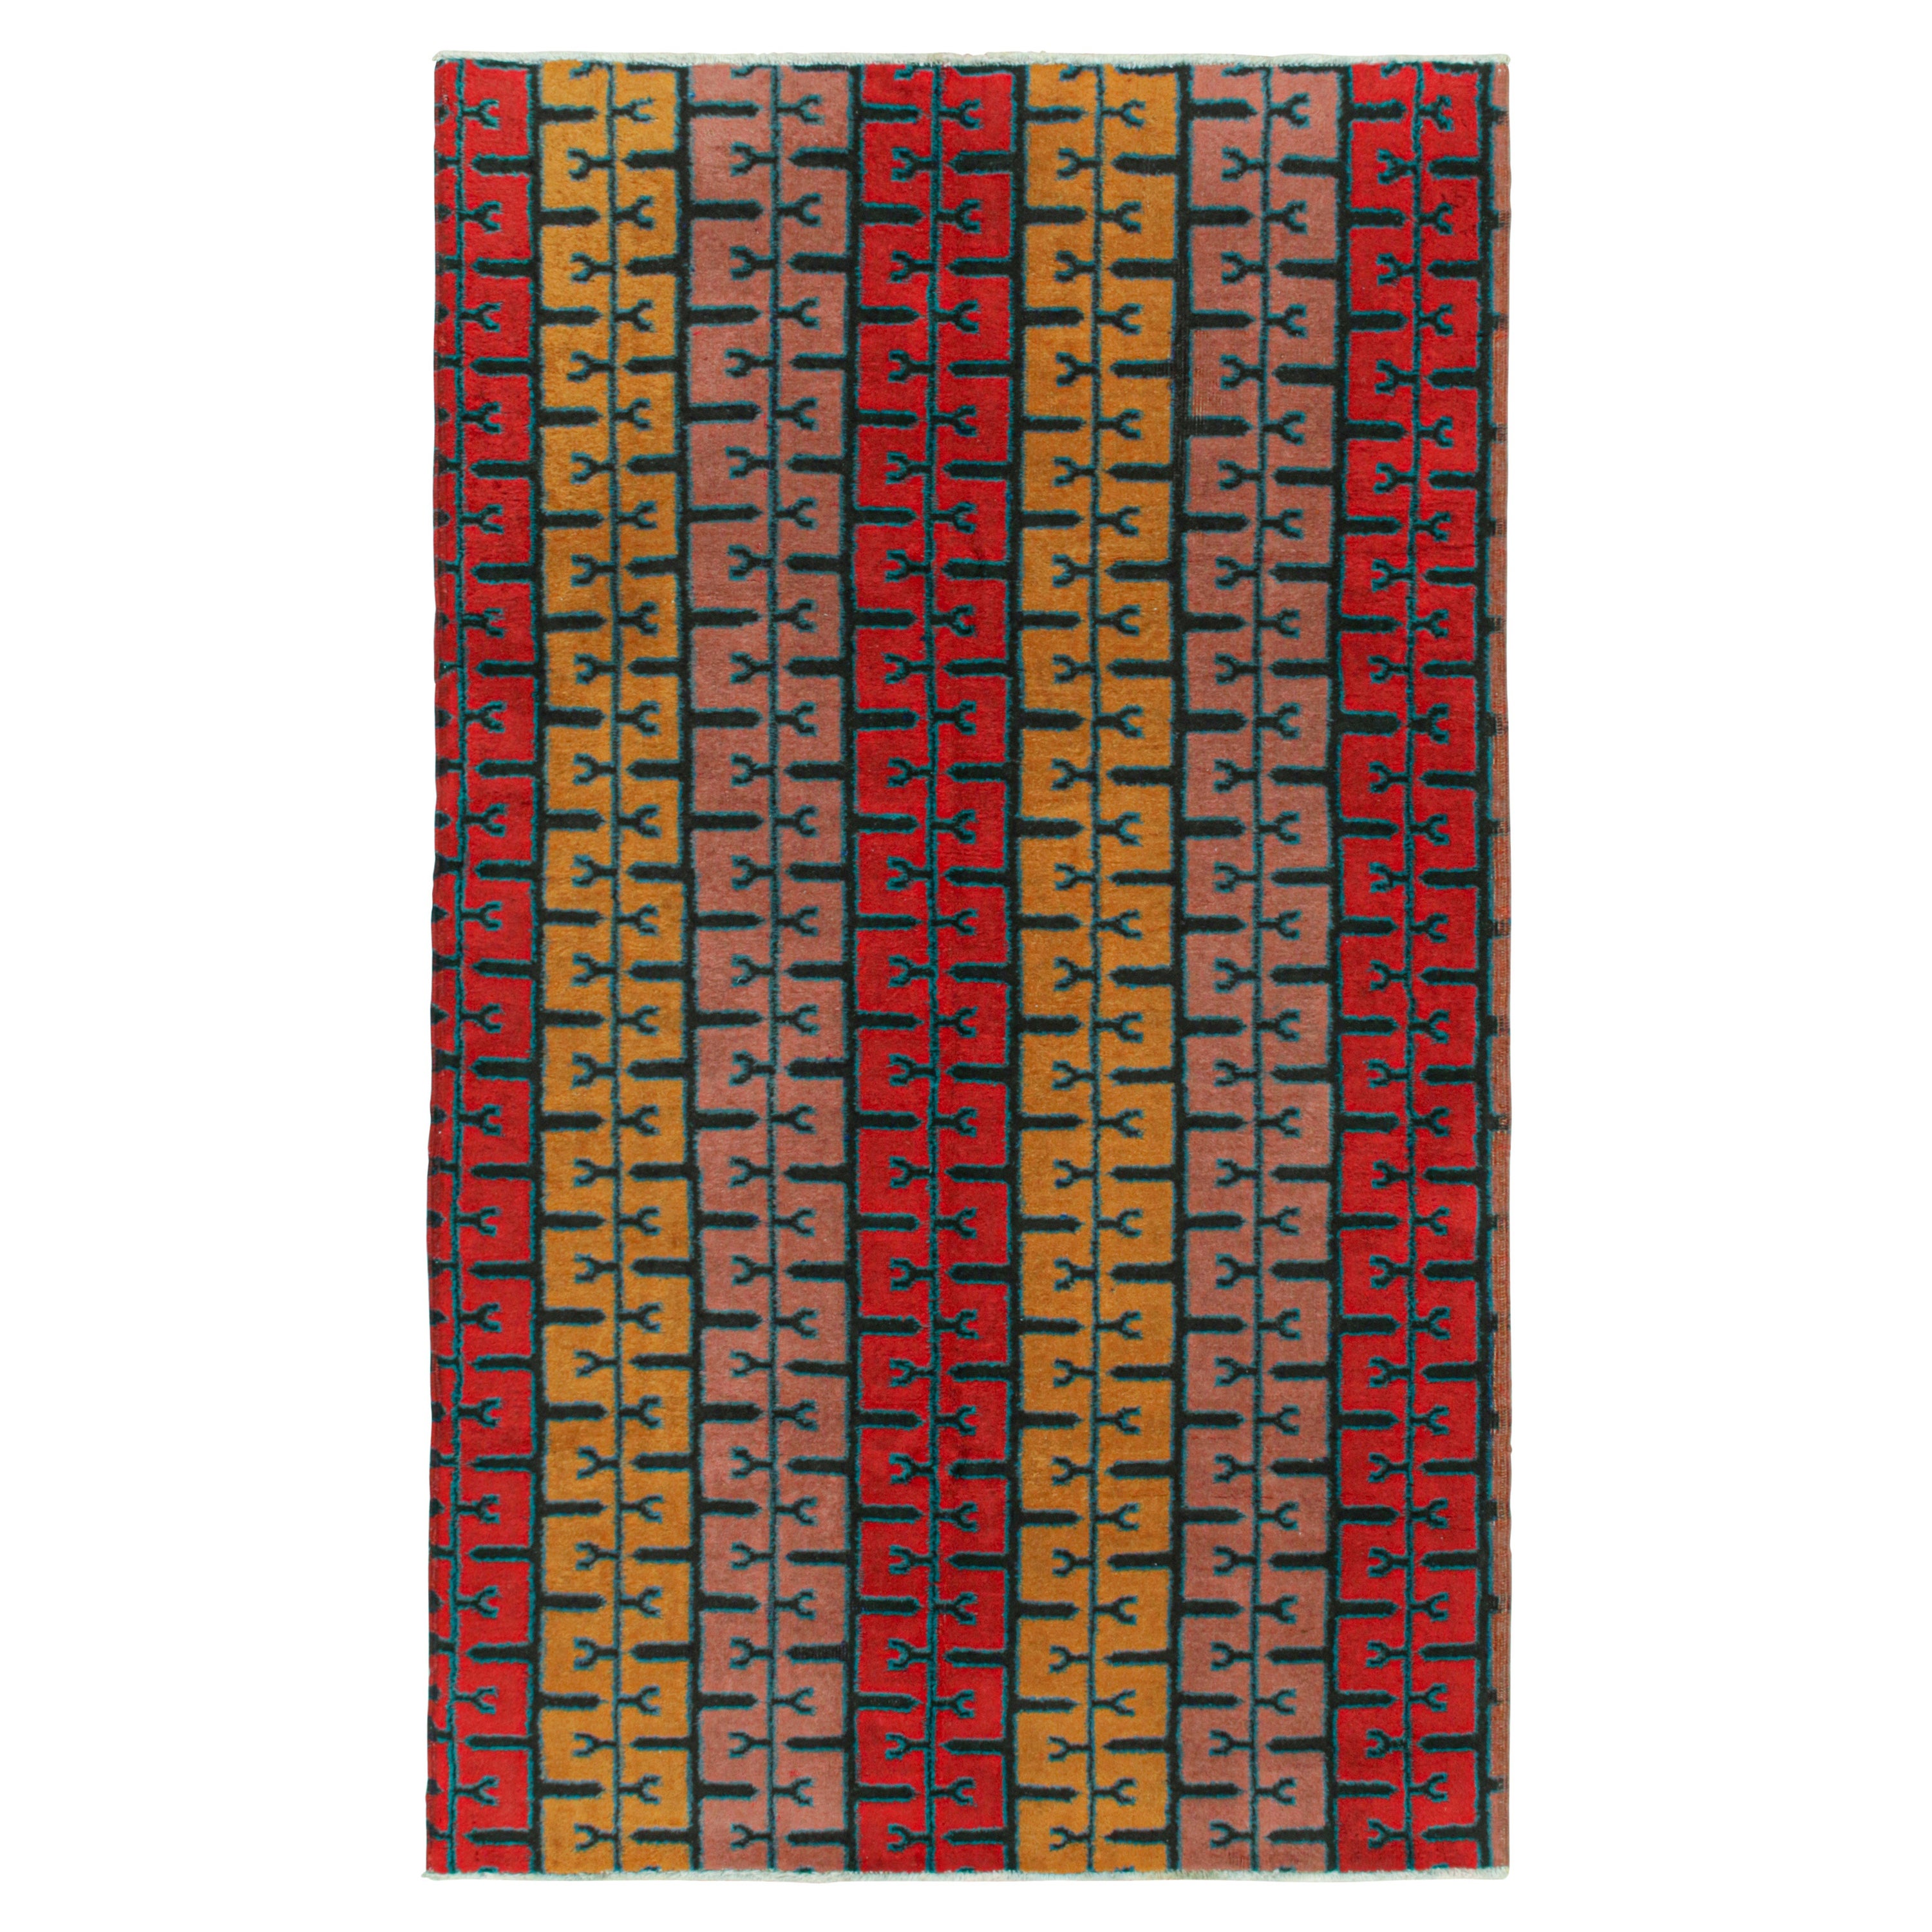 Vintage Zeki Müren Rug in Ochre, Red and Pink Geometric Patterns by Rug & Kilim For Sale